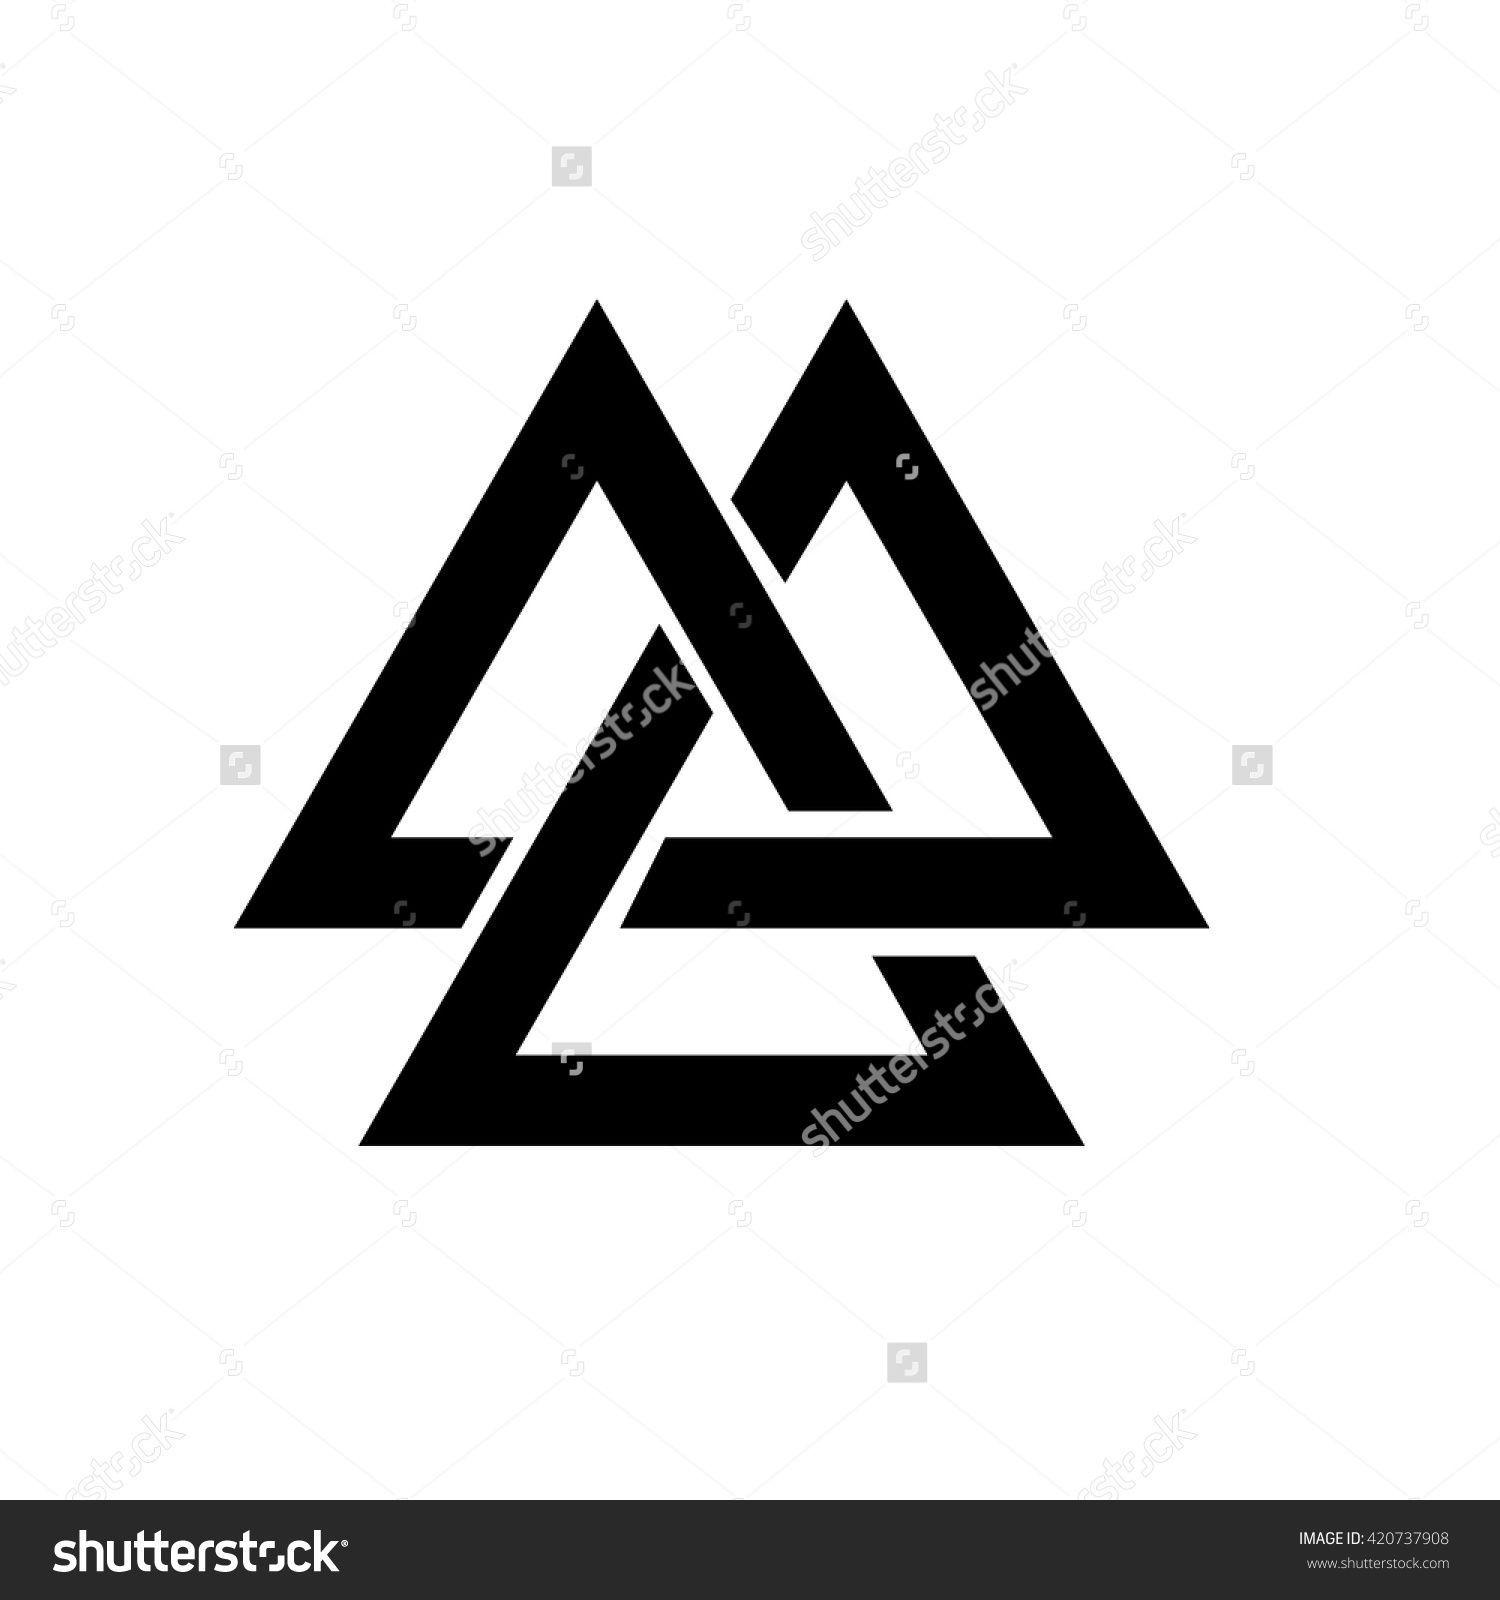 Black Triangle Logo - Triangle Logo. Valknut Is A Viking Age Symbol, Which Representing